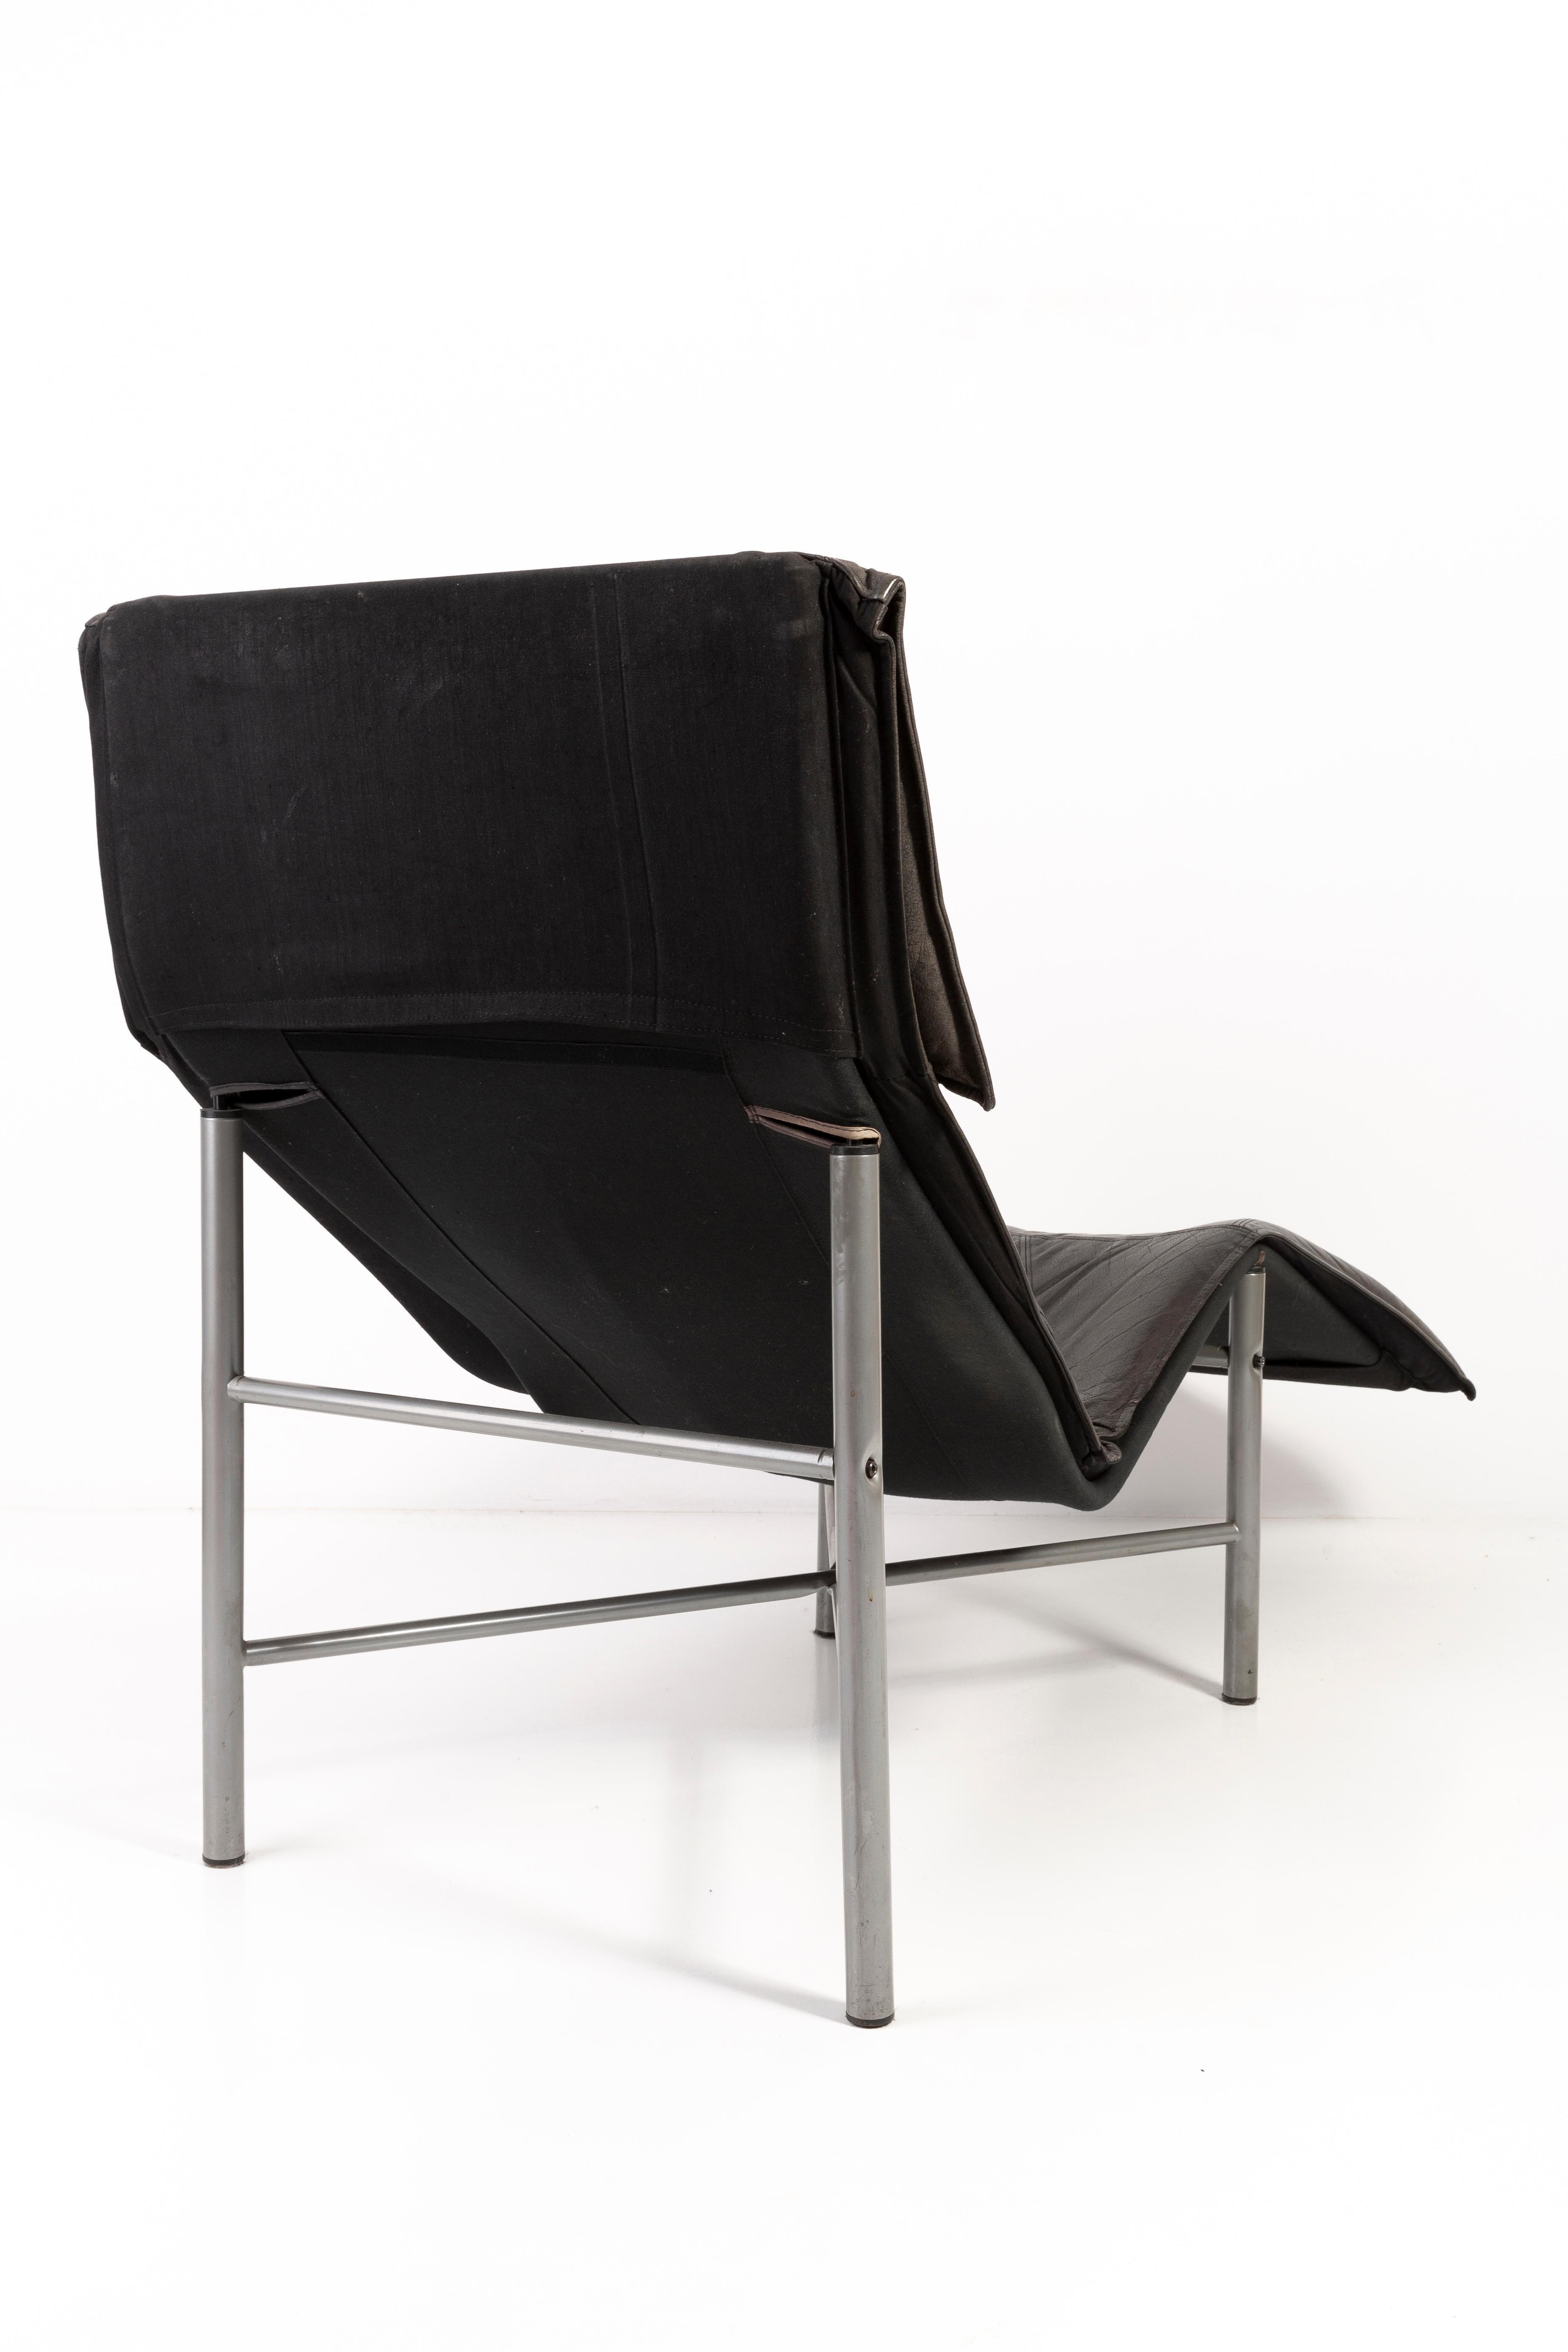 Midcentury Danish Modern Black Leather Chaise Lounge Chair by Tord Björklund 2